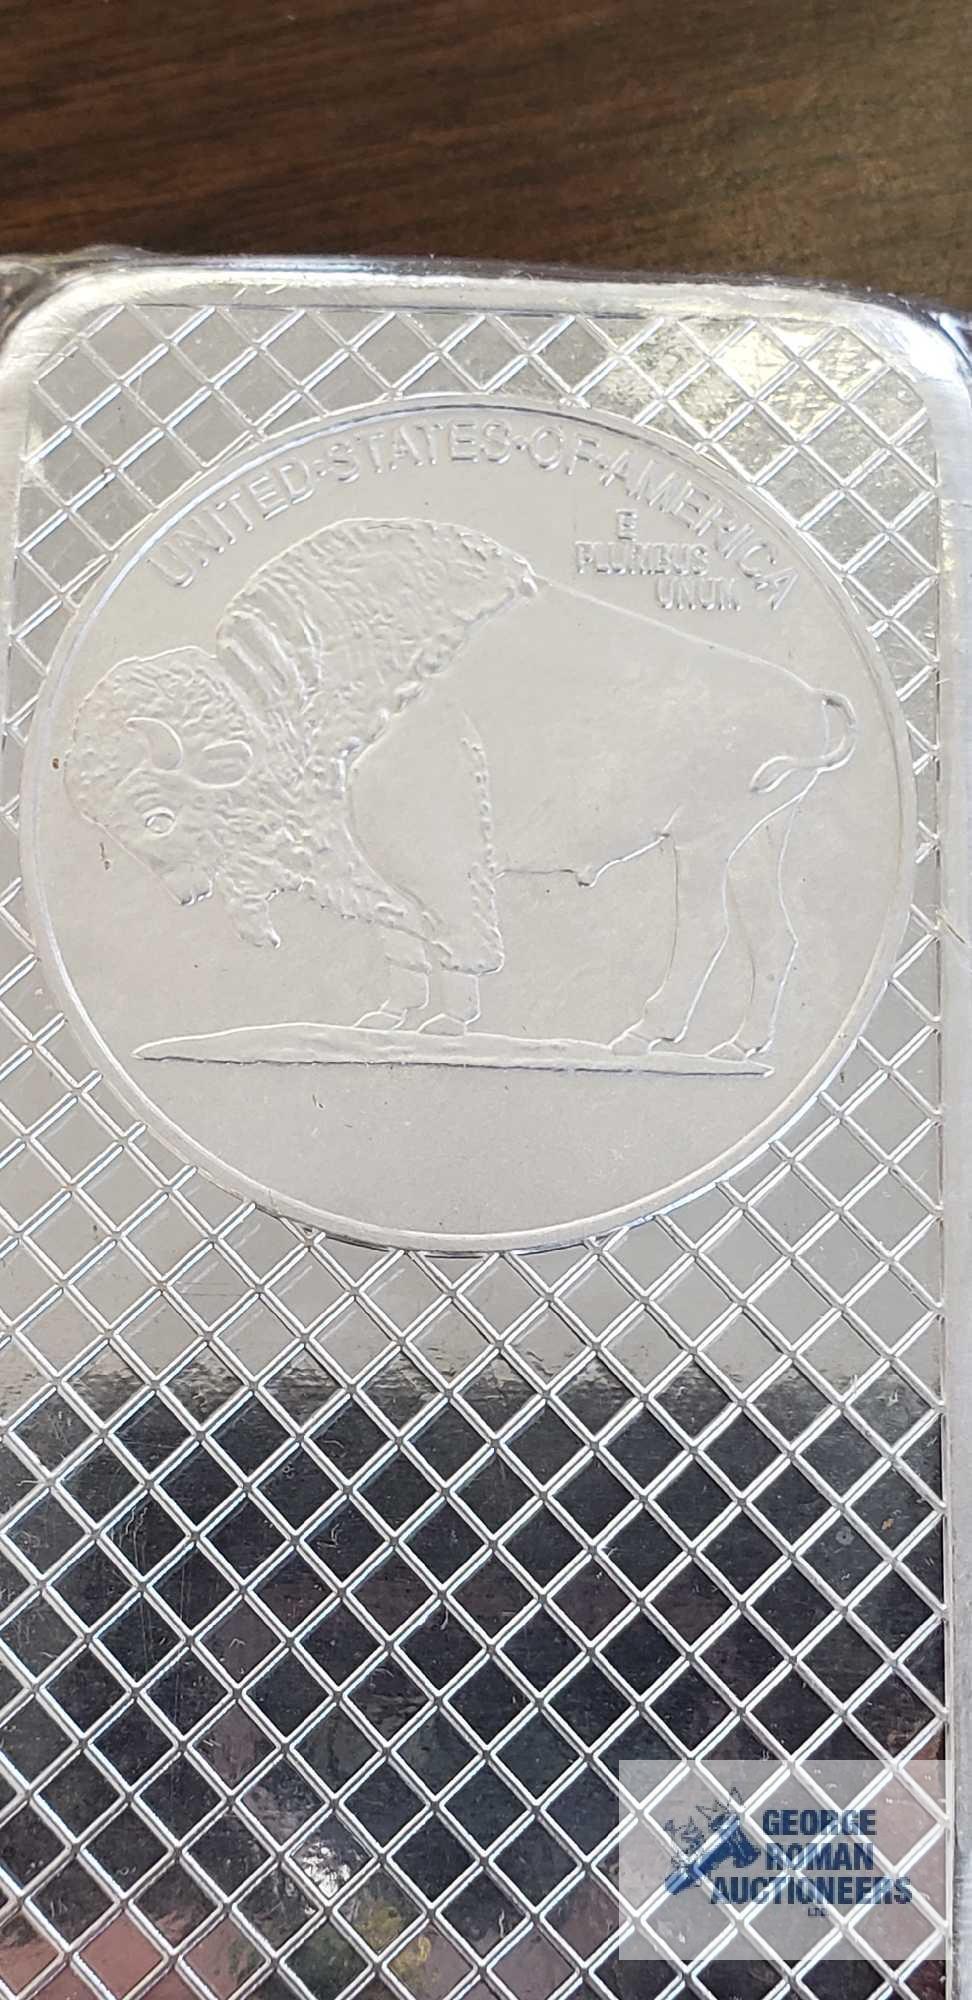 Buffalo .999 fine silver 10 troy ounces bars Quantity 4